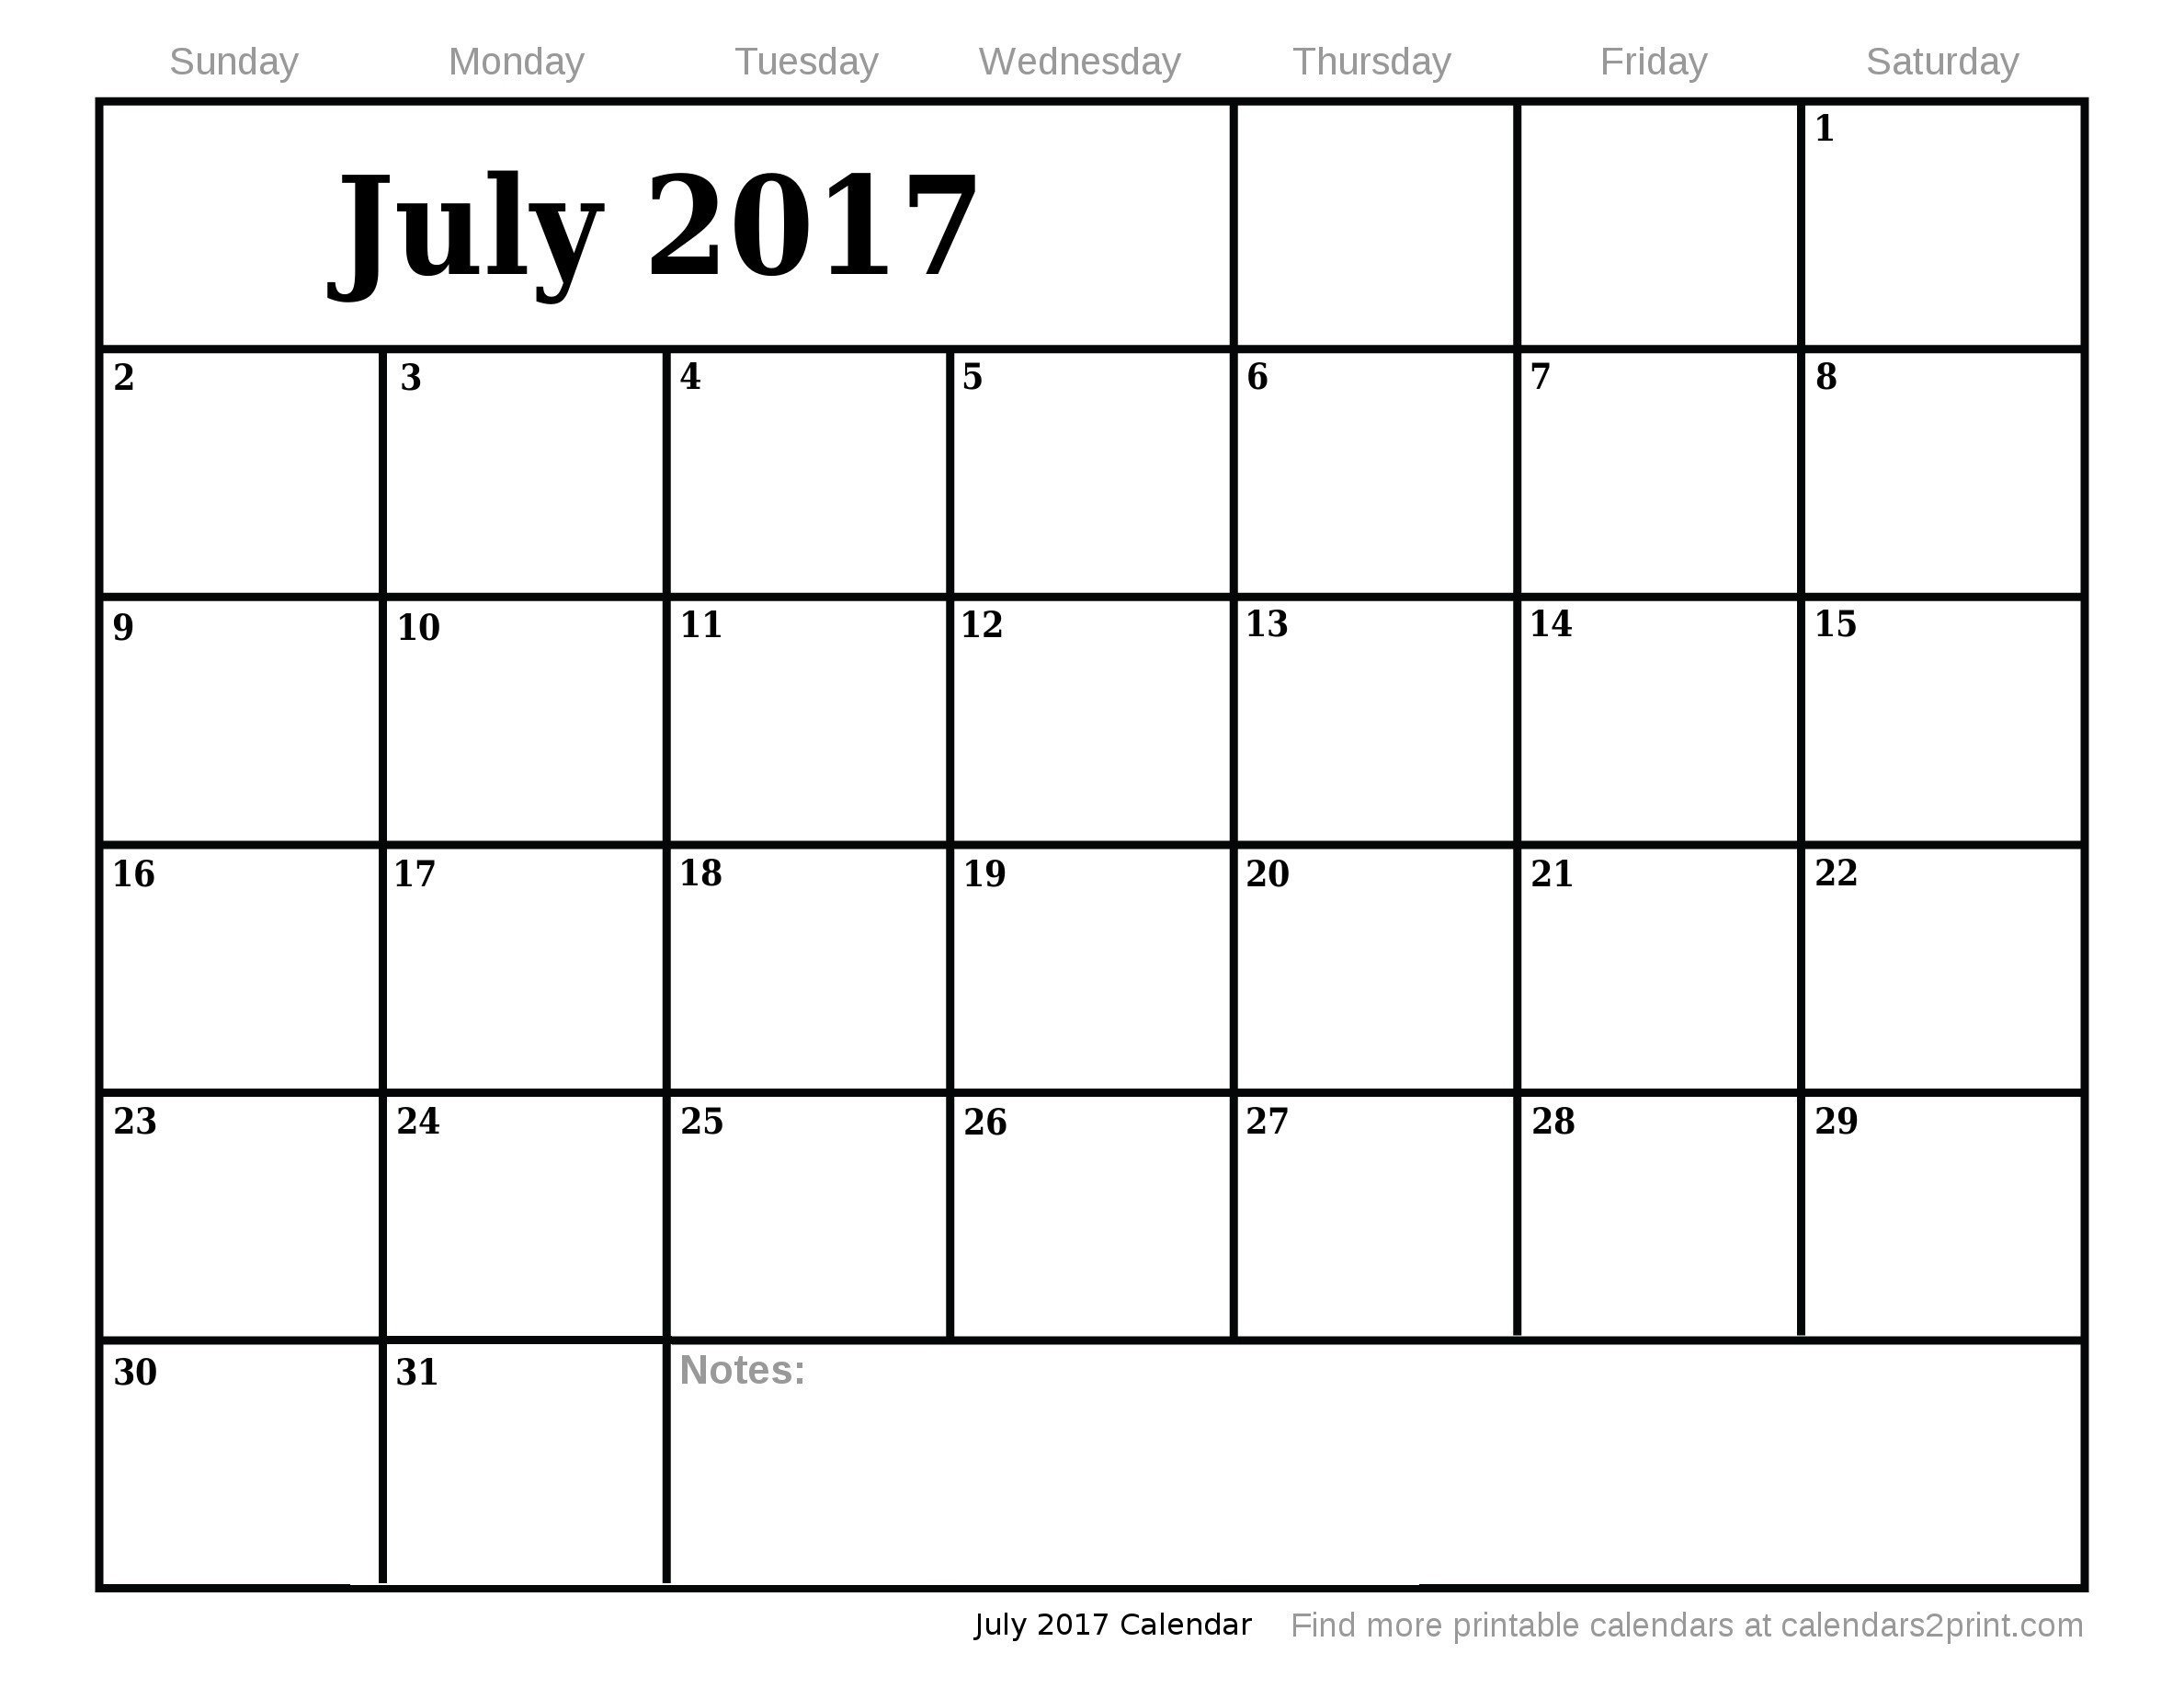 July 17 Calendar | Thekpark-Hadong Dashing Blank Calendar July 17